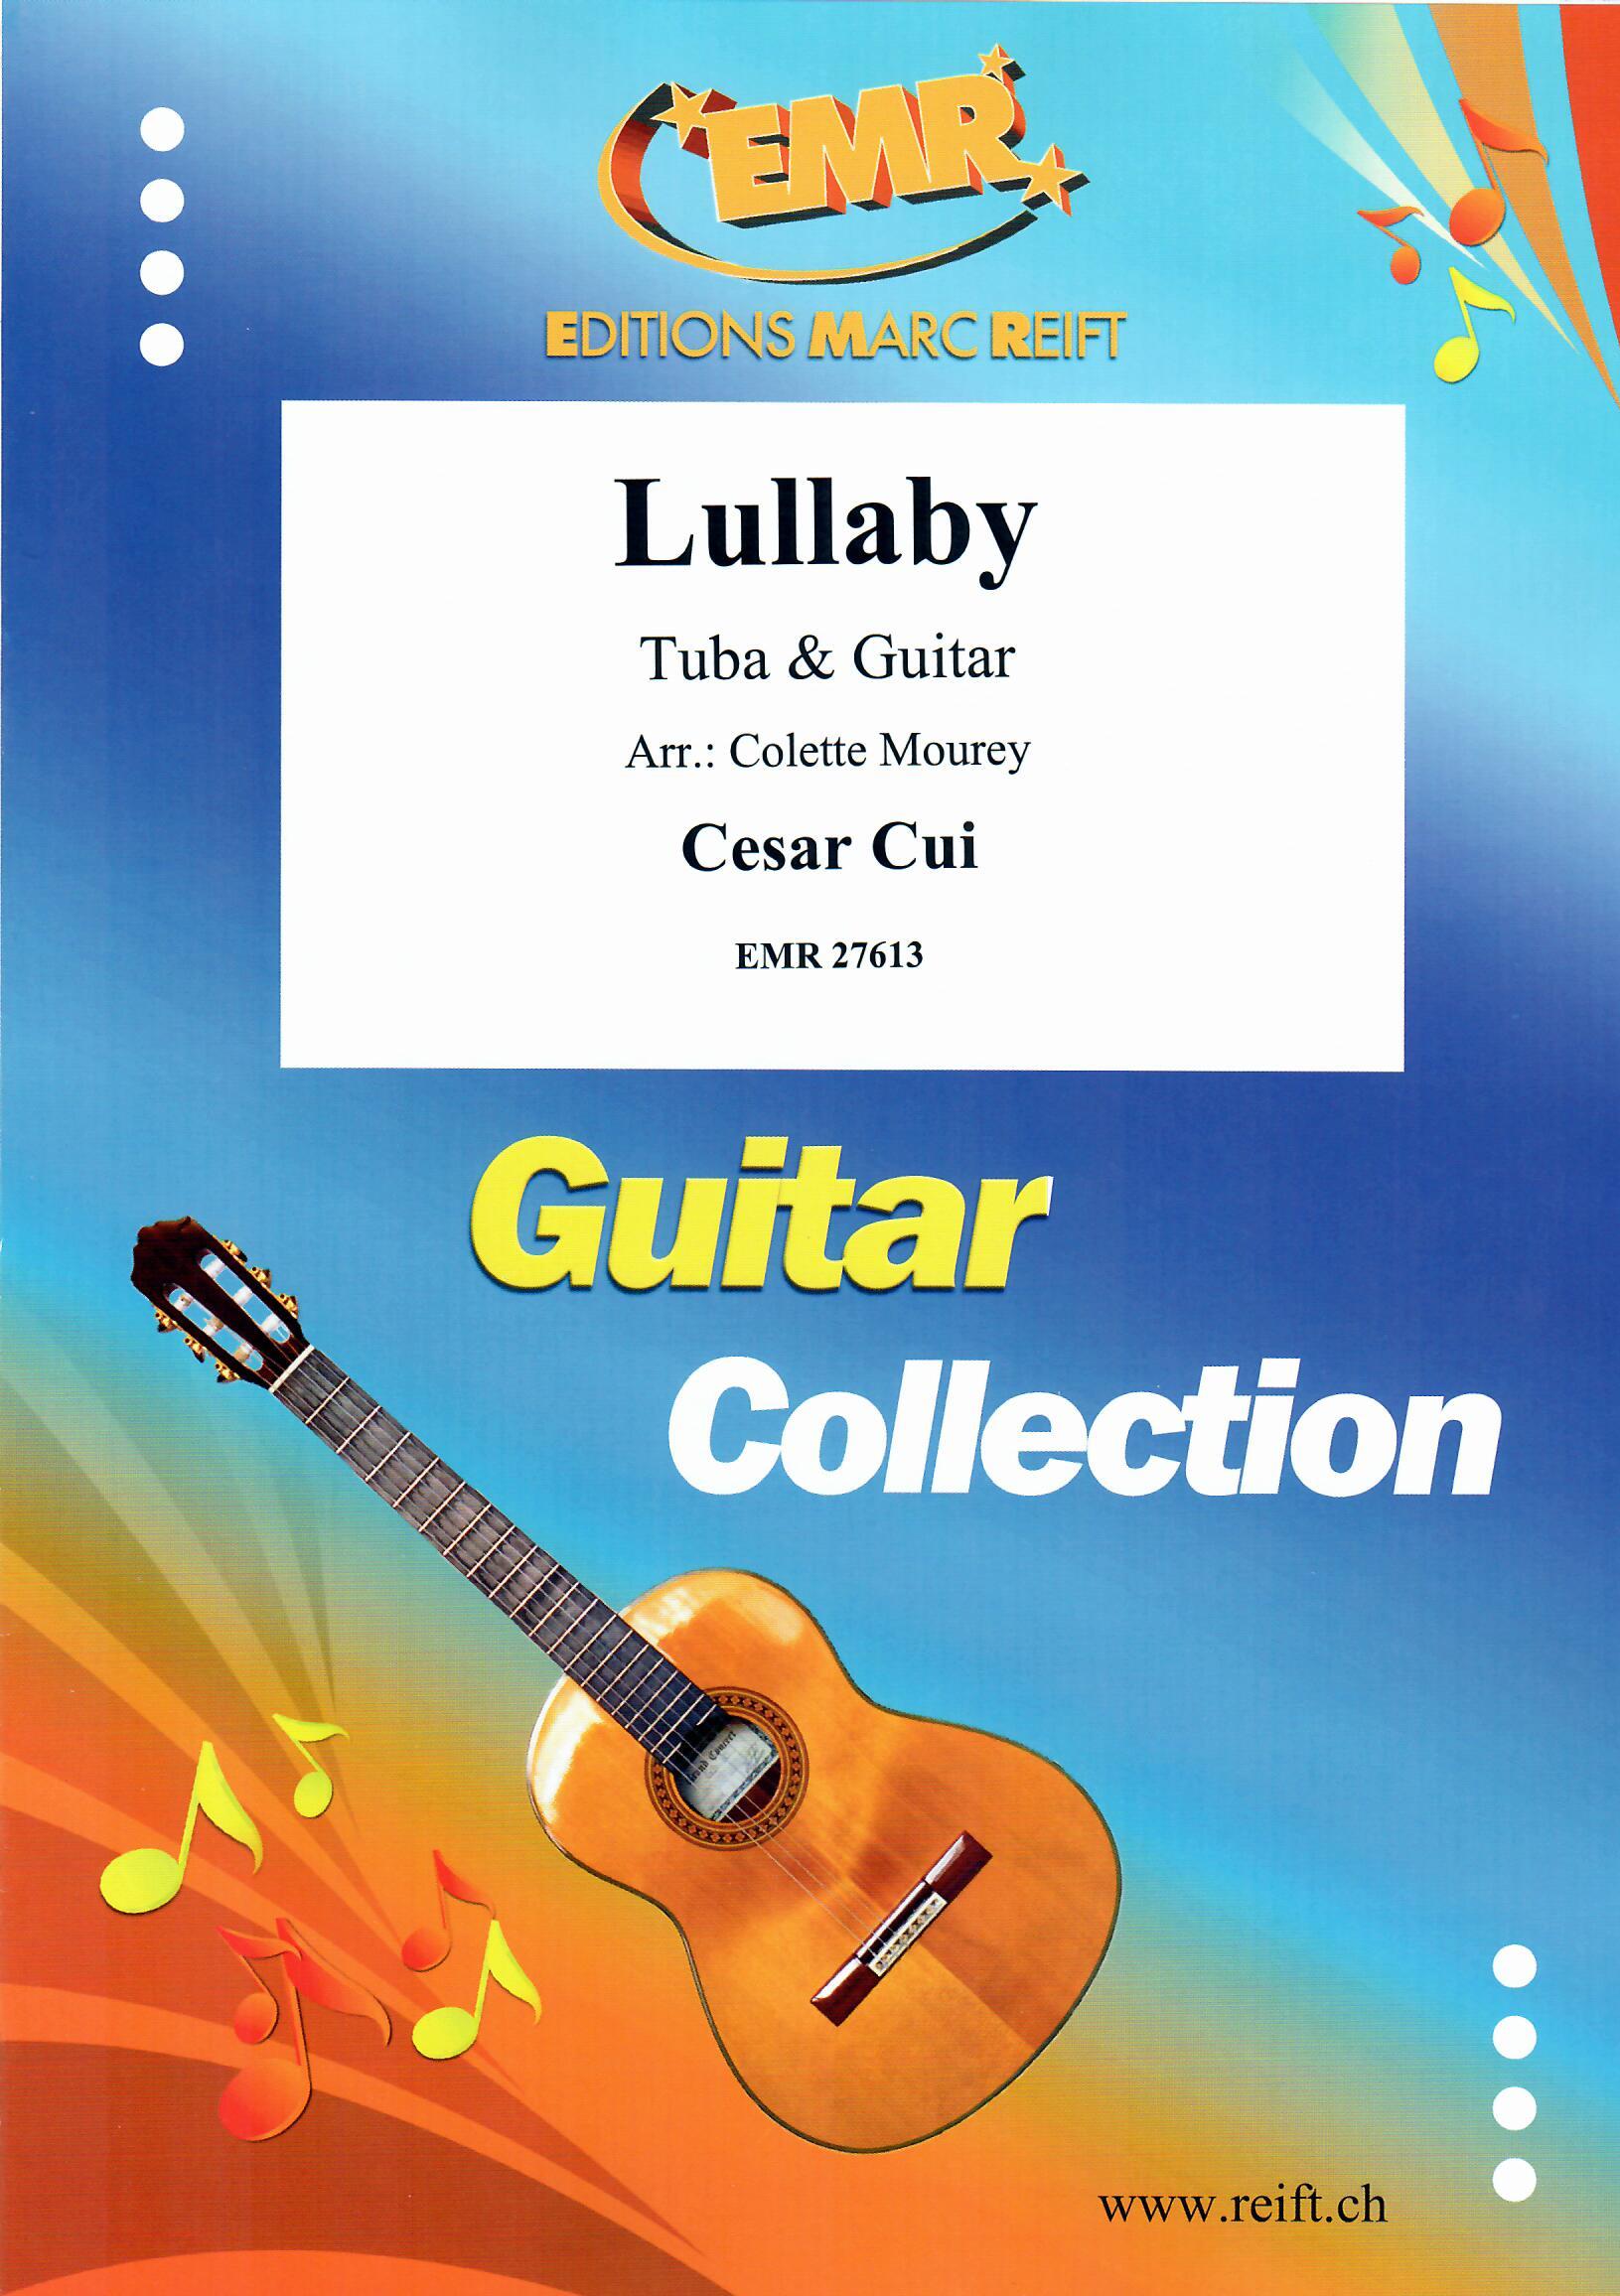 LULLABY, SOLOS - E♭. Bass